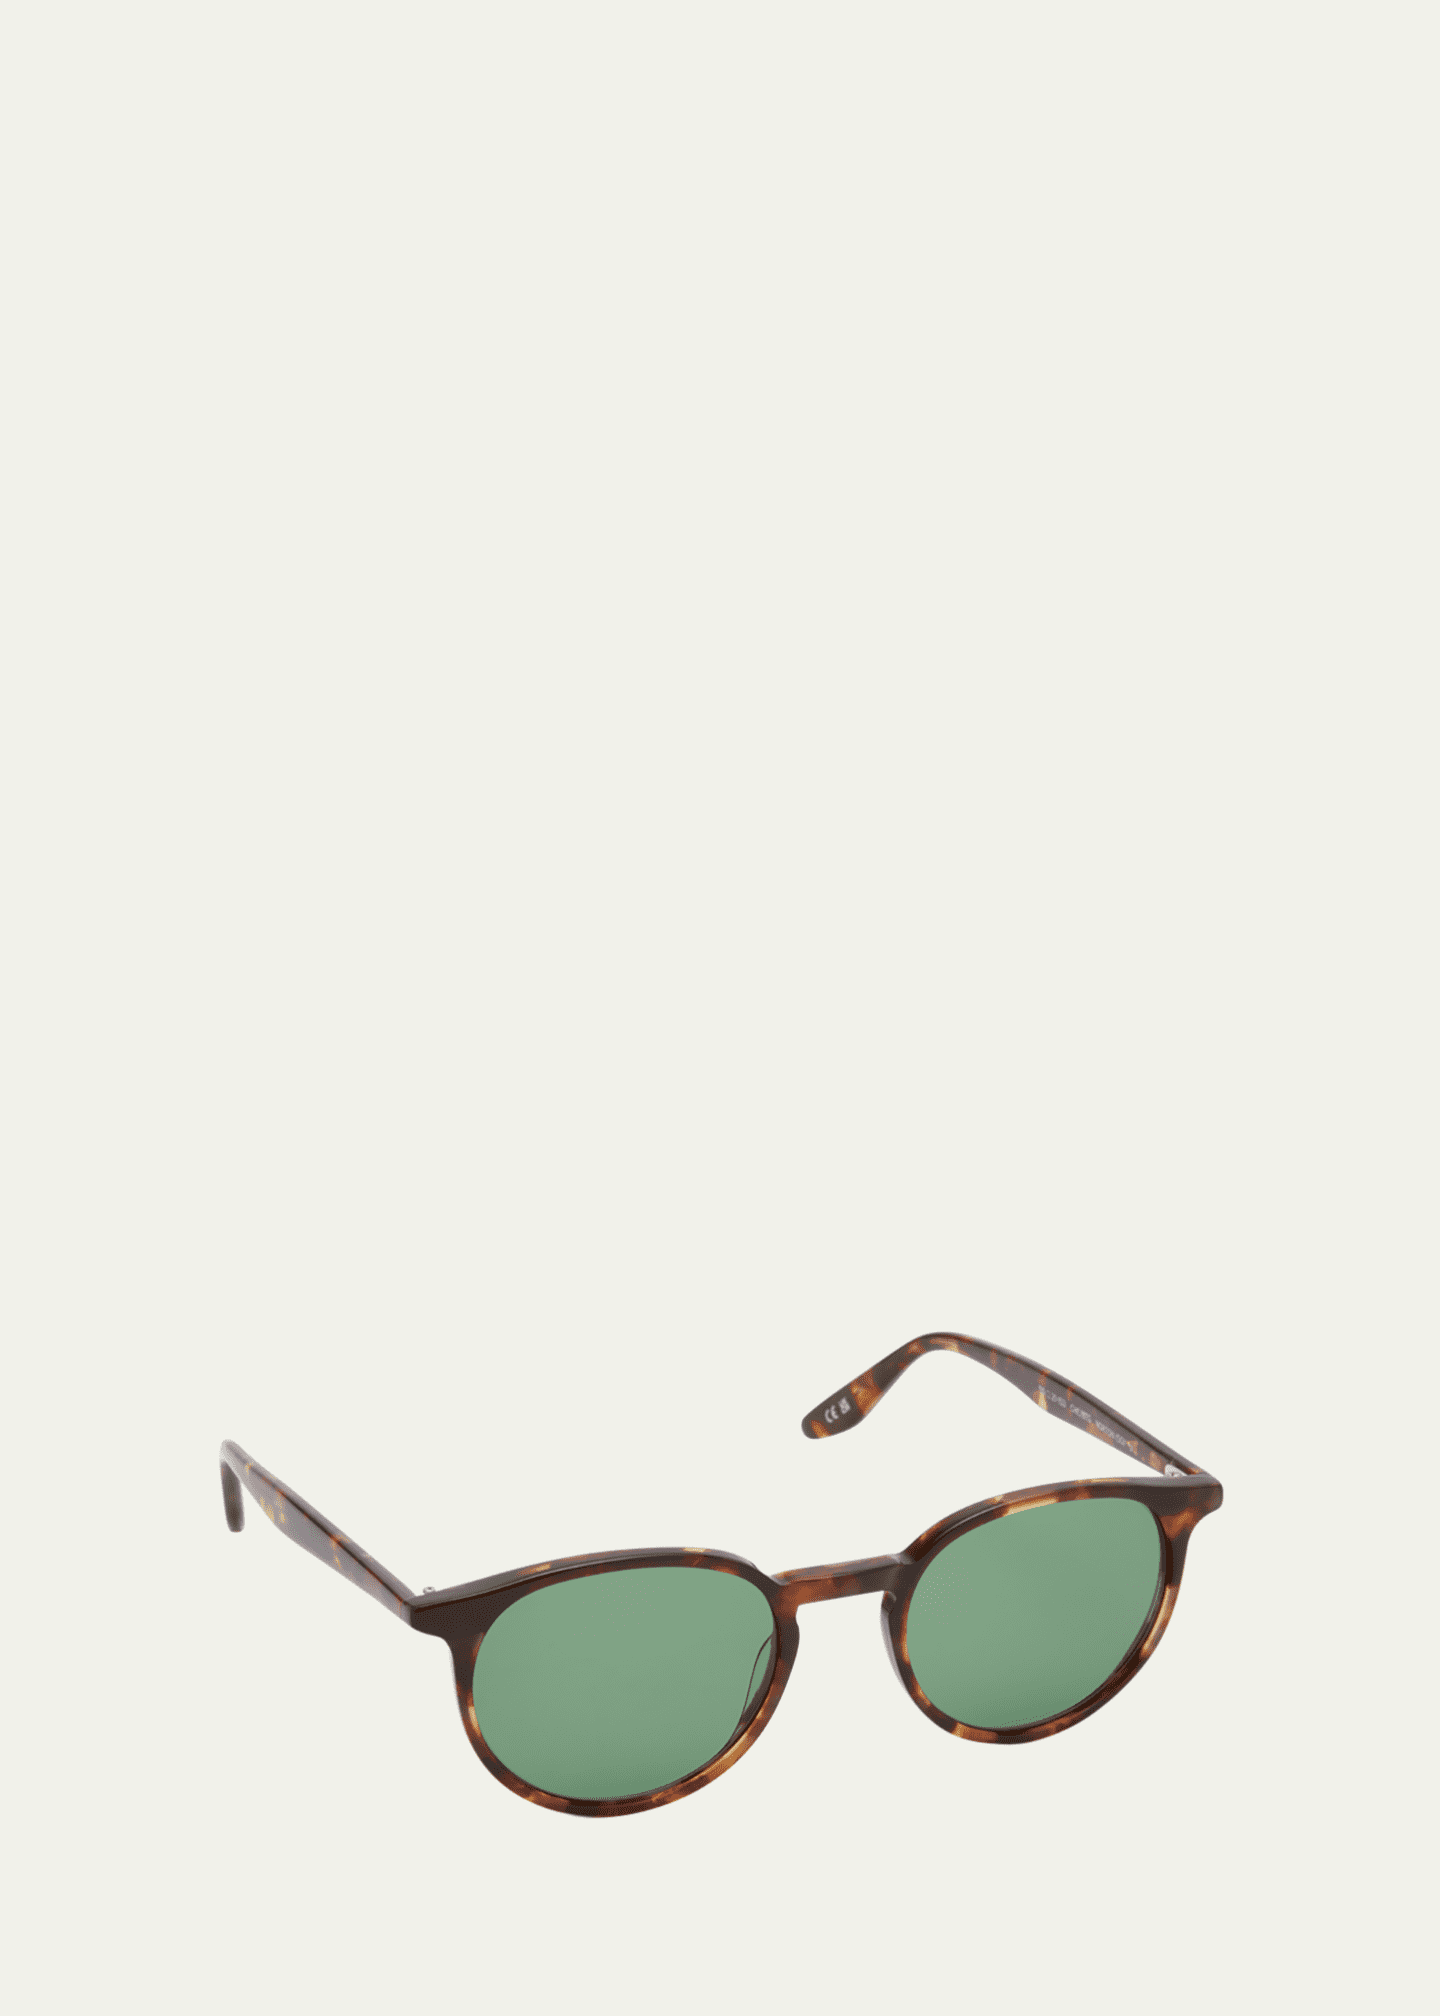 Barton Perreira Men's 007 Tortoiseshell Round Sunglasses Goodman